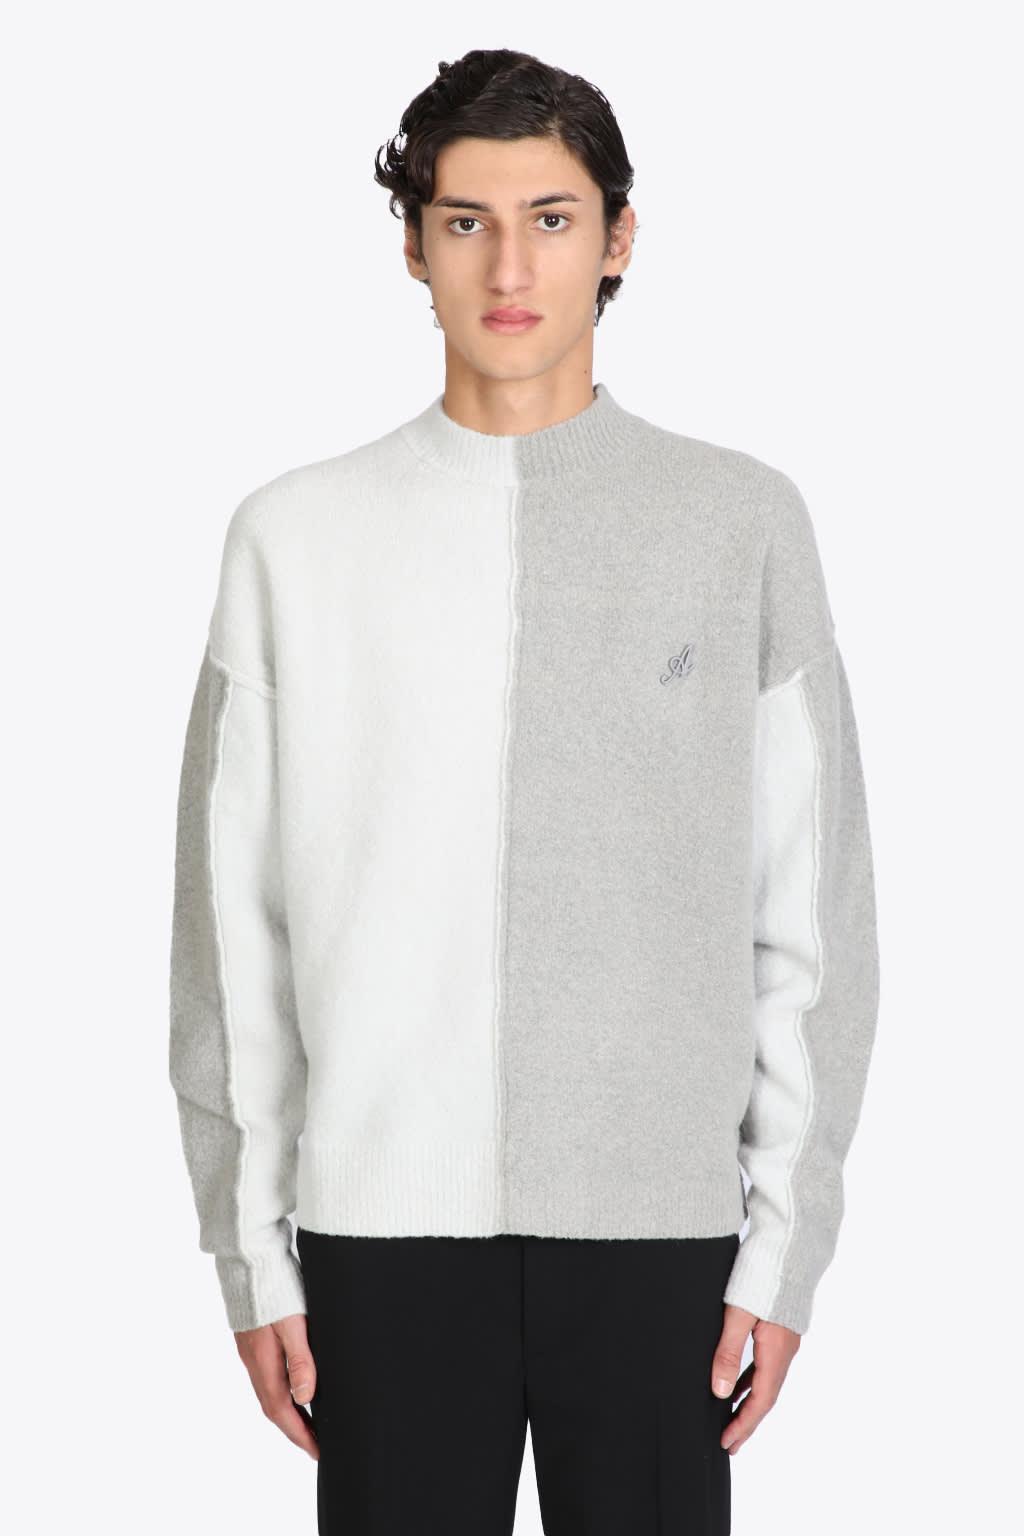 Axel Arigato Fraction Sweater Light and dark grey wool paneled sweater - Fraction sweater